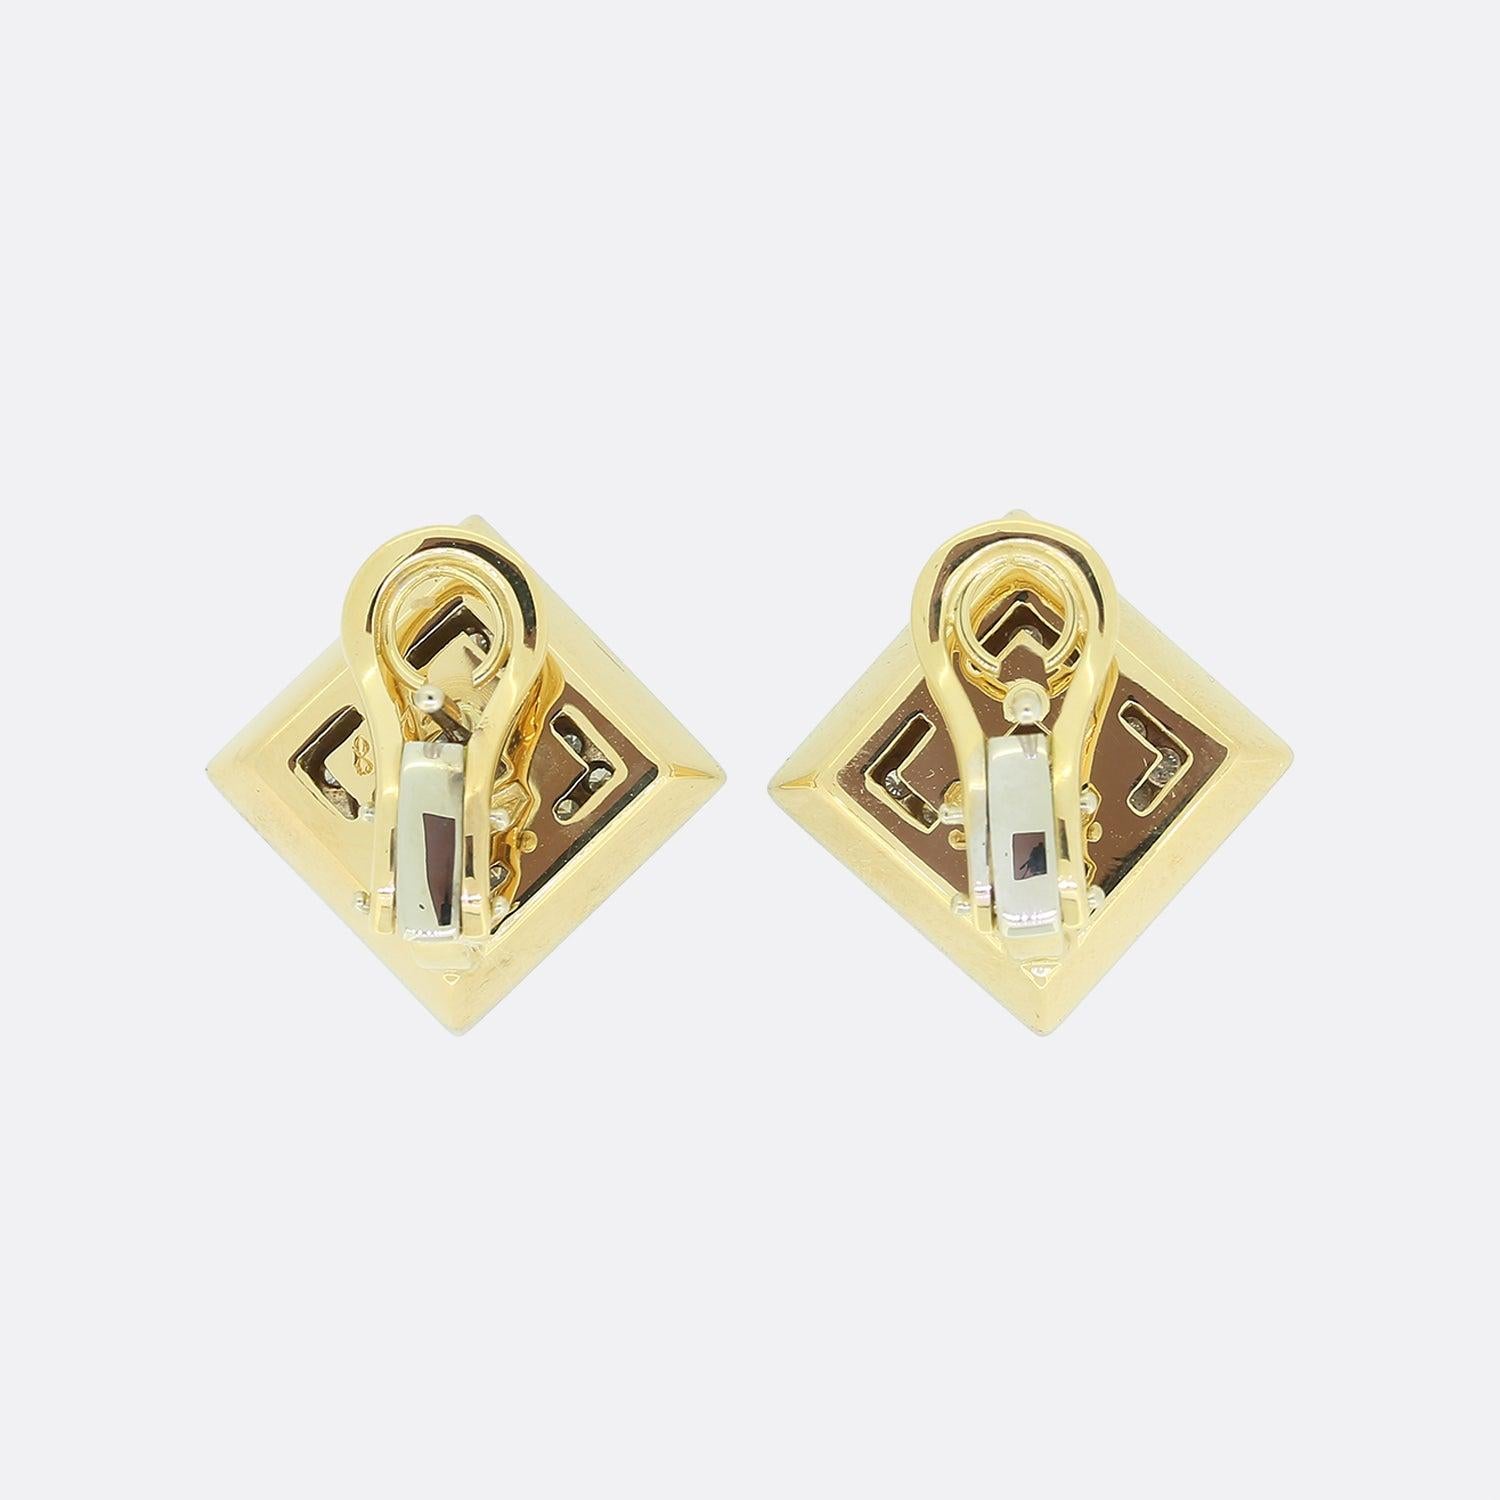 Brilliant Cut Wempe 0.75 Carat Diamond Earrings For Sale